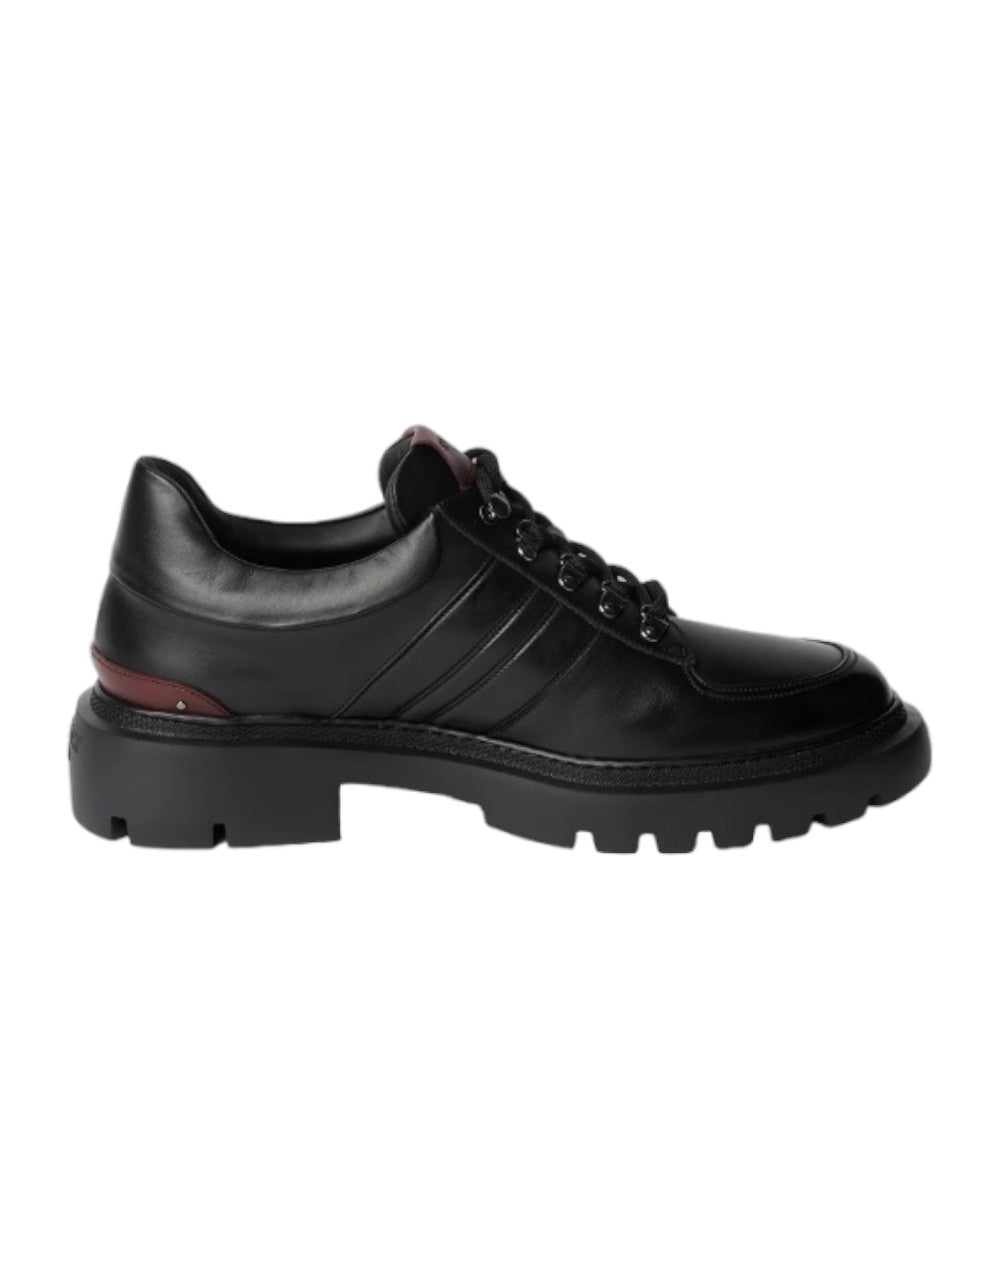 Shop Bally Valnis 6239850 Men's Black Calf Leather Ankle Boots